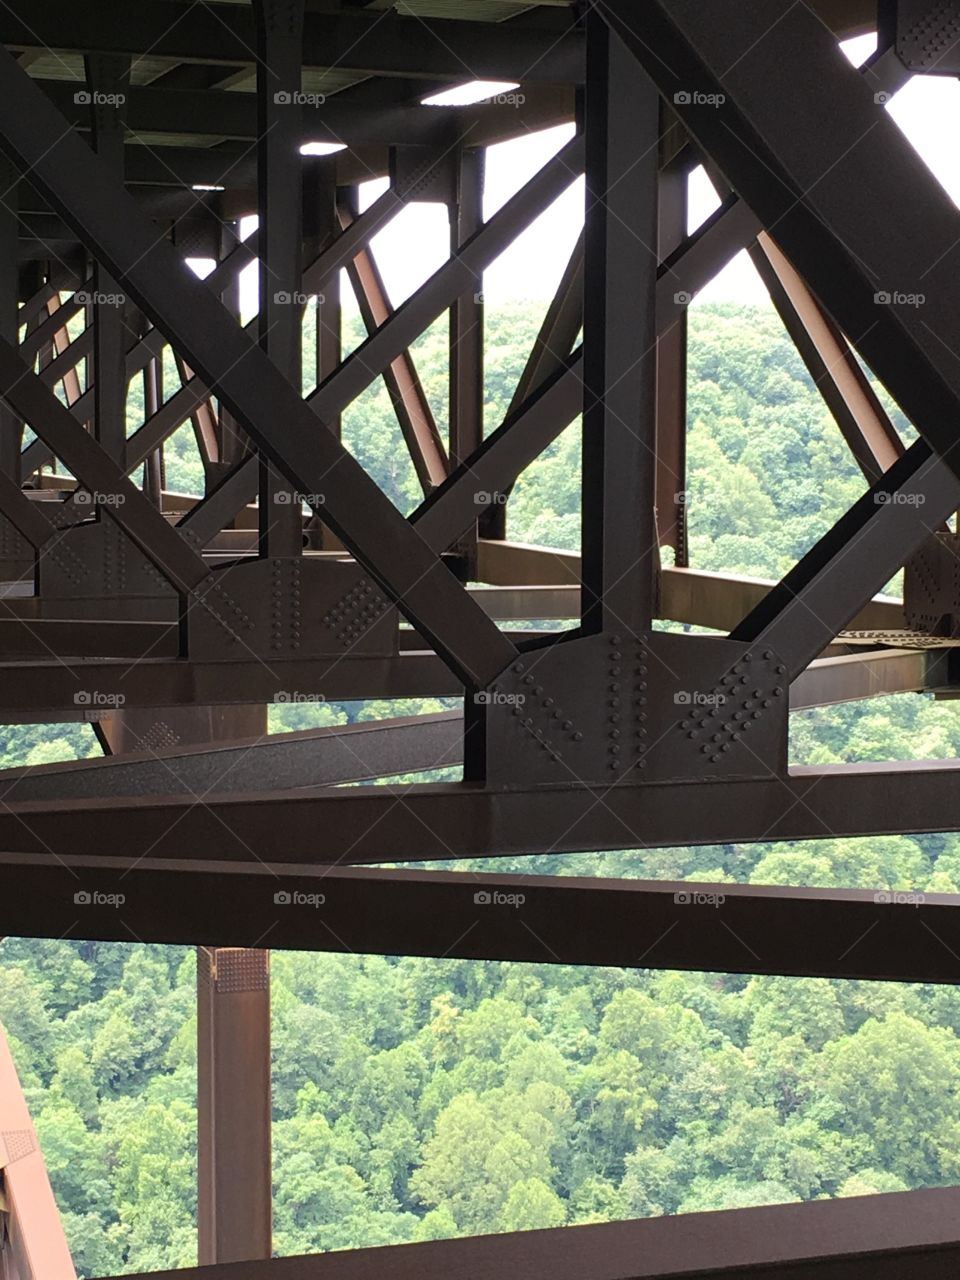 Views from New River Gorge Bridge catwalk - West Virginia 